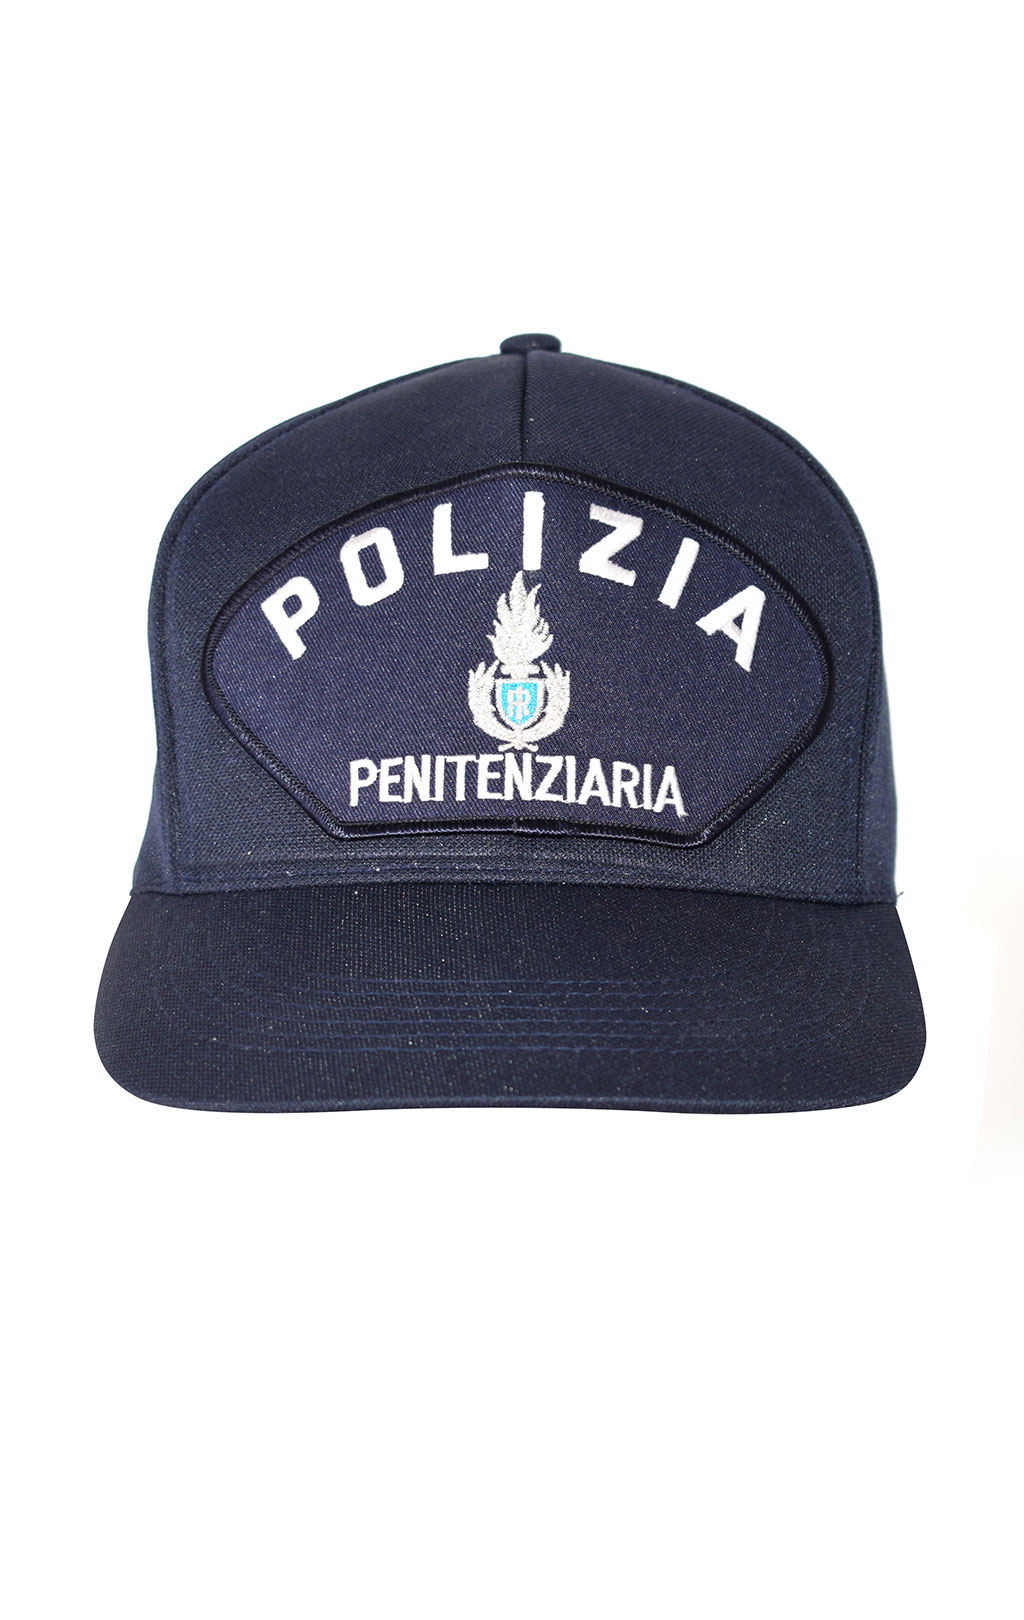 Бейсболка армейская POLIZIA A PENITENZIARIA dark blue Италия